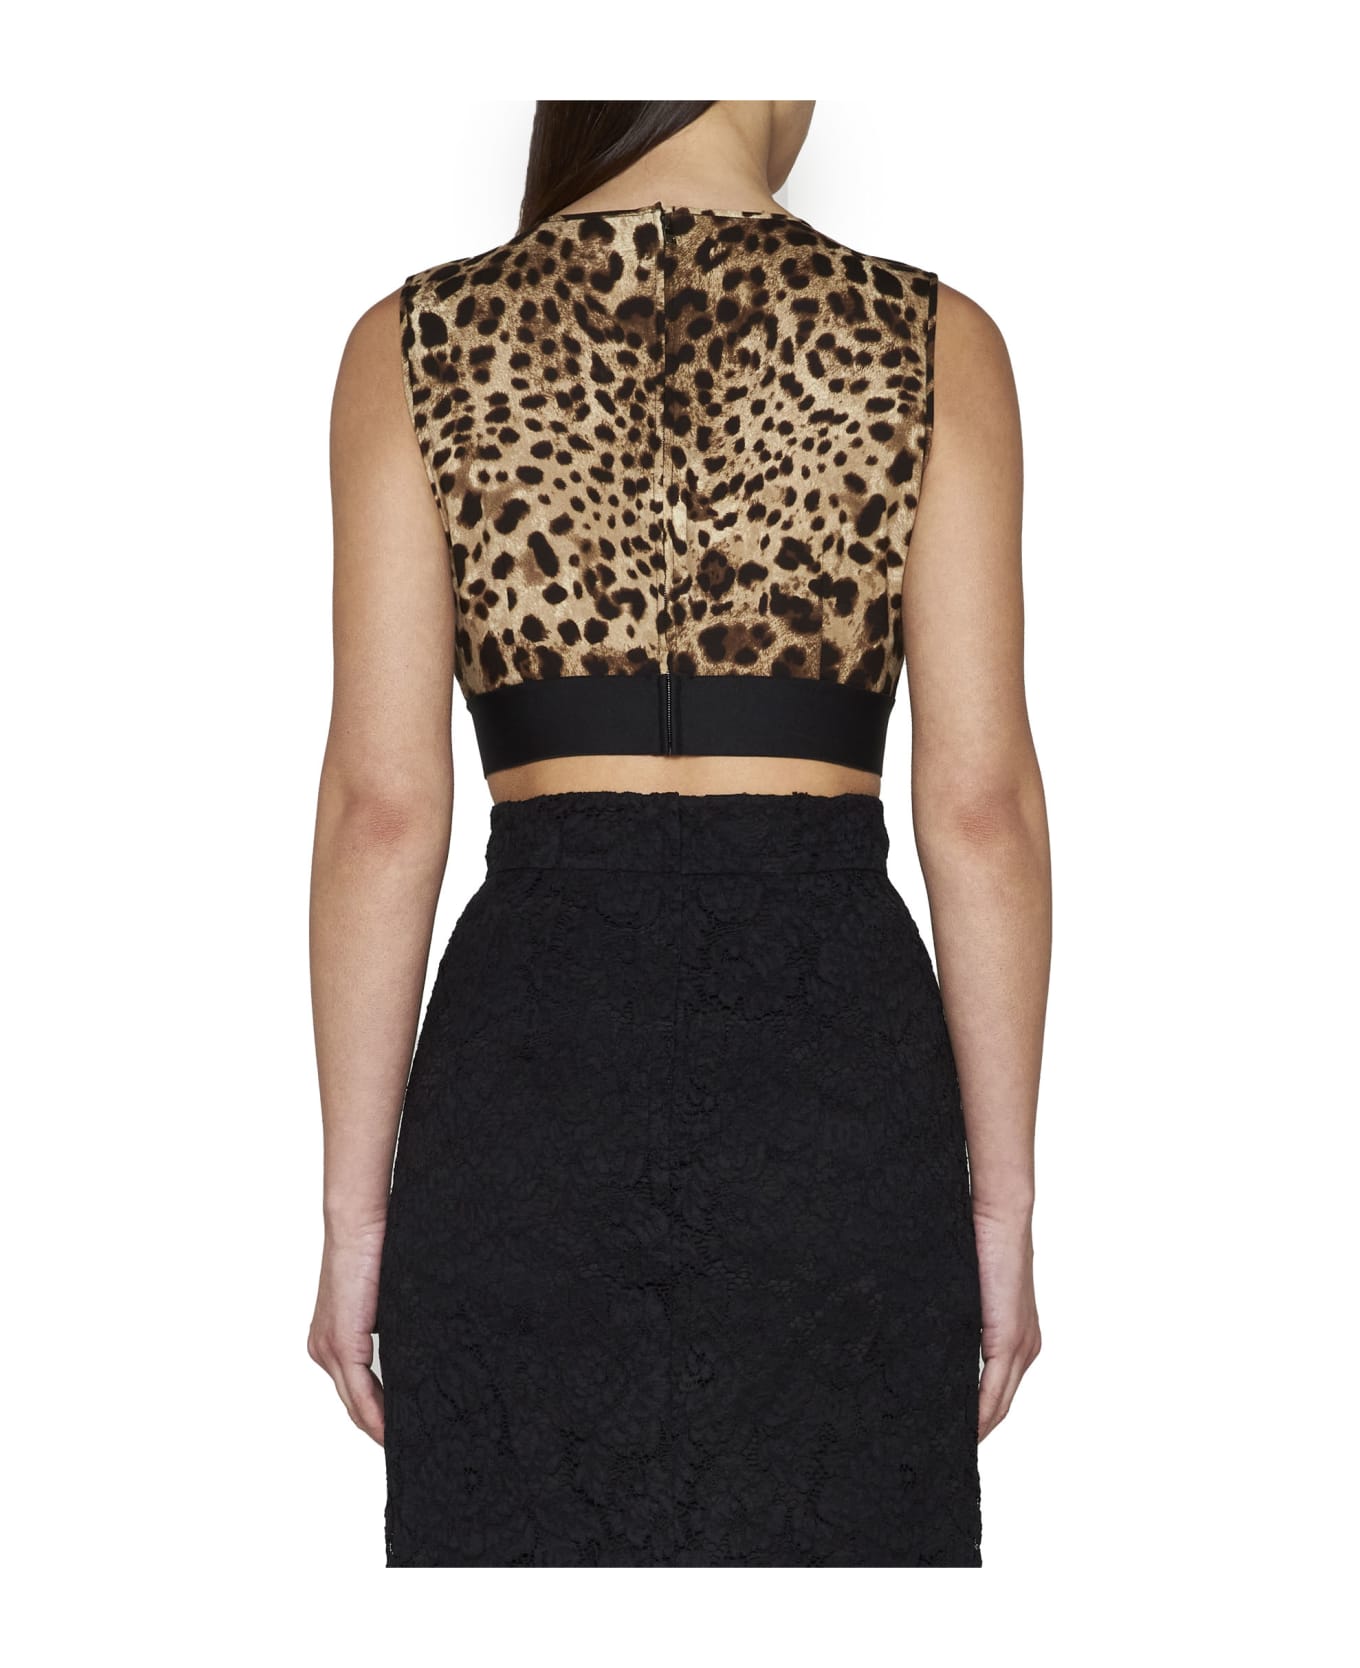 Dolce & Gabbana Leopard Printed Sleeveless Top - Leo new